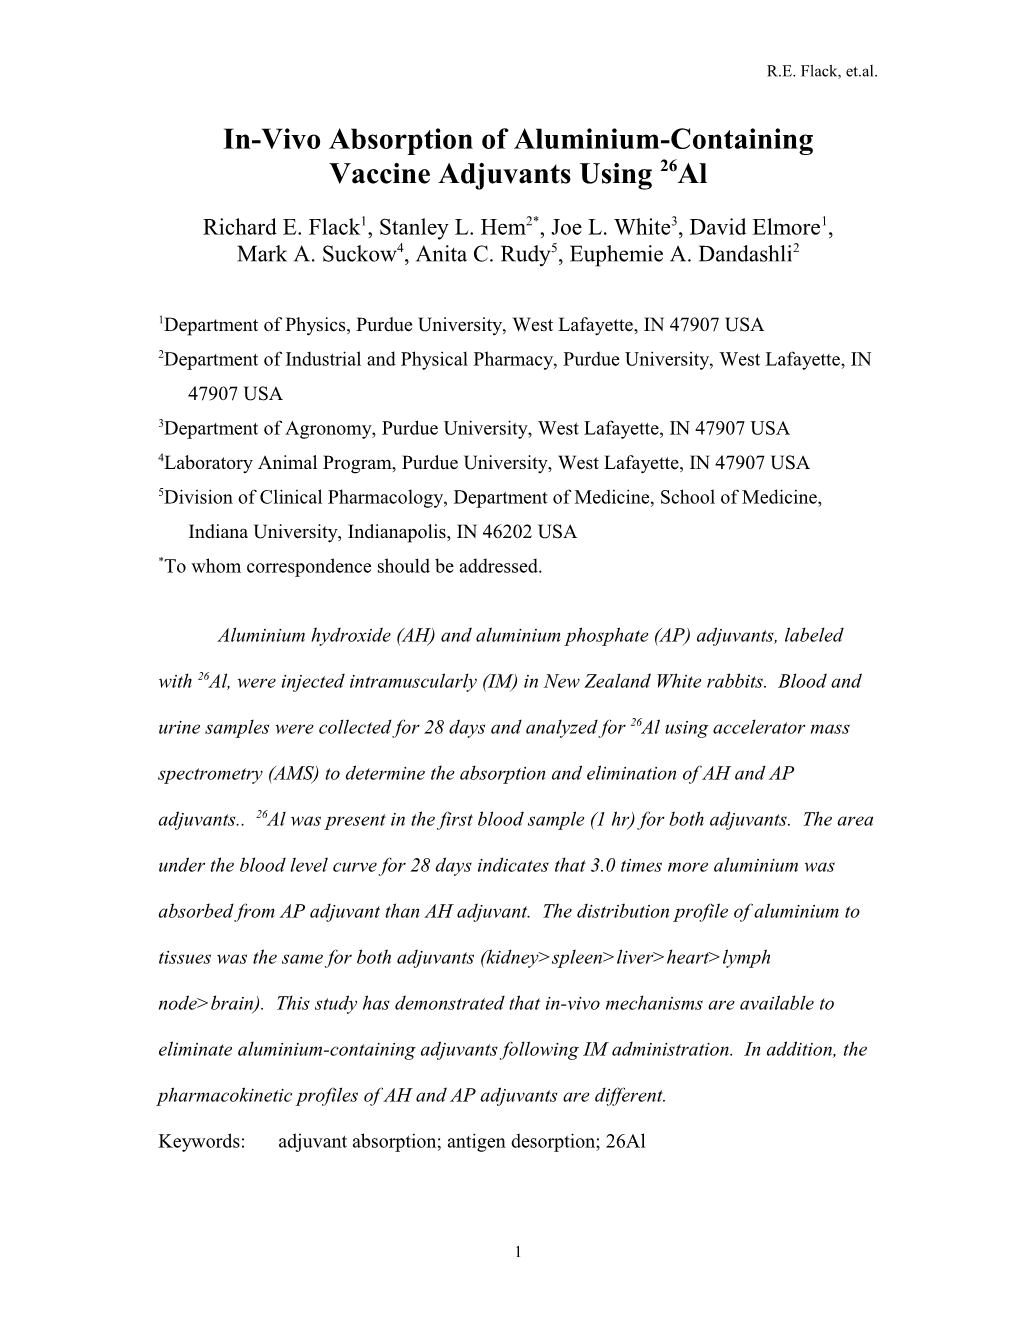 In-Vivo Absorption of Aluminum-Containing Vaccine